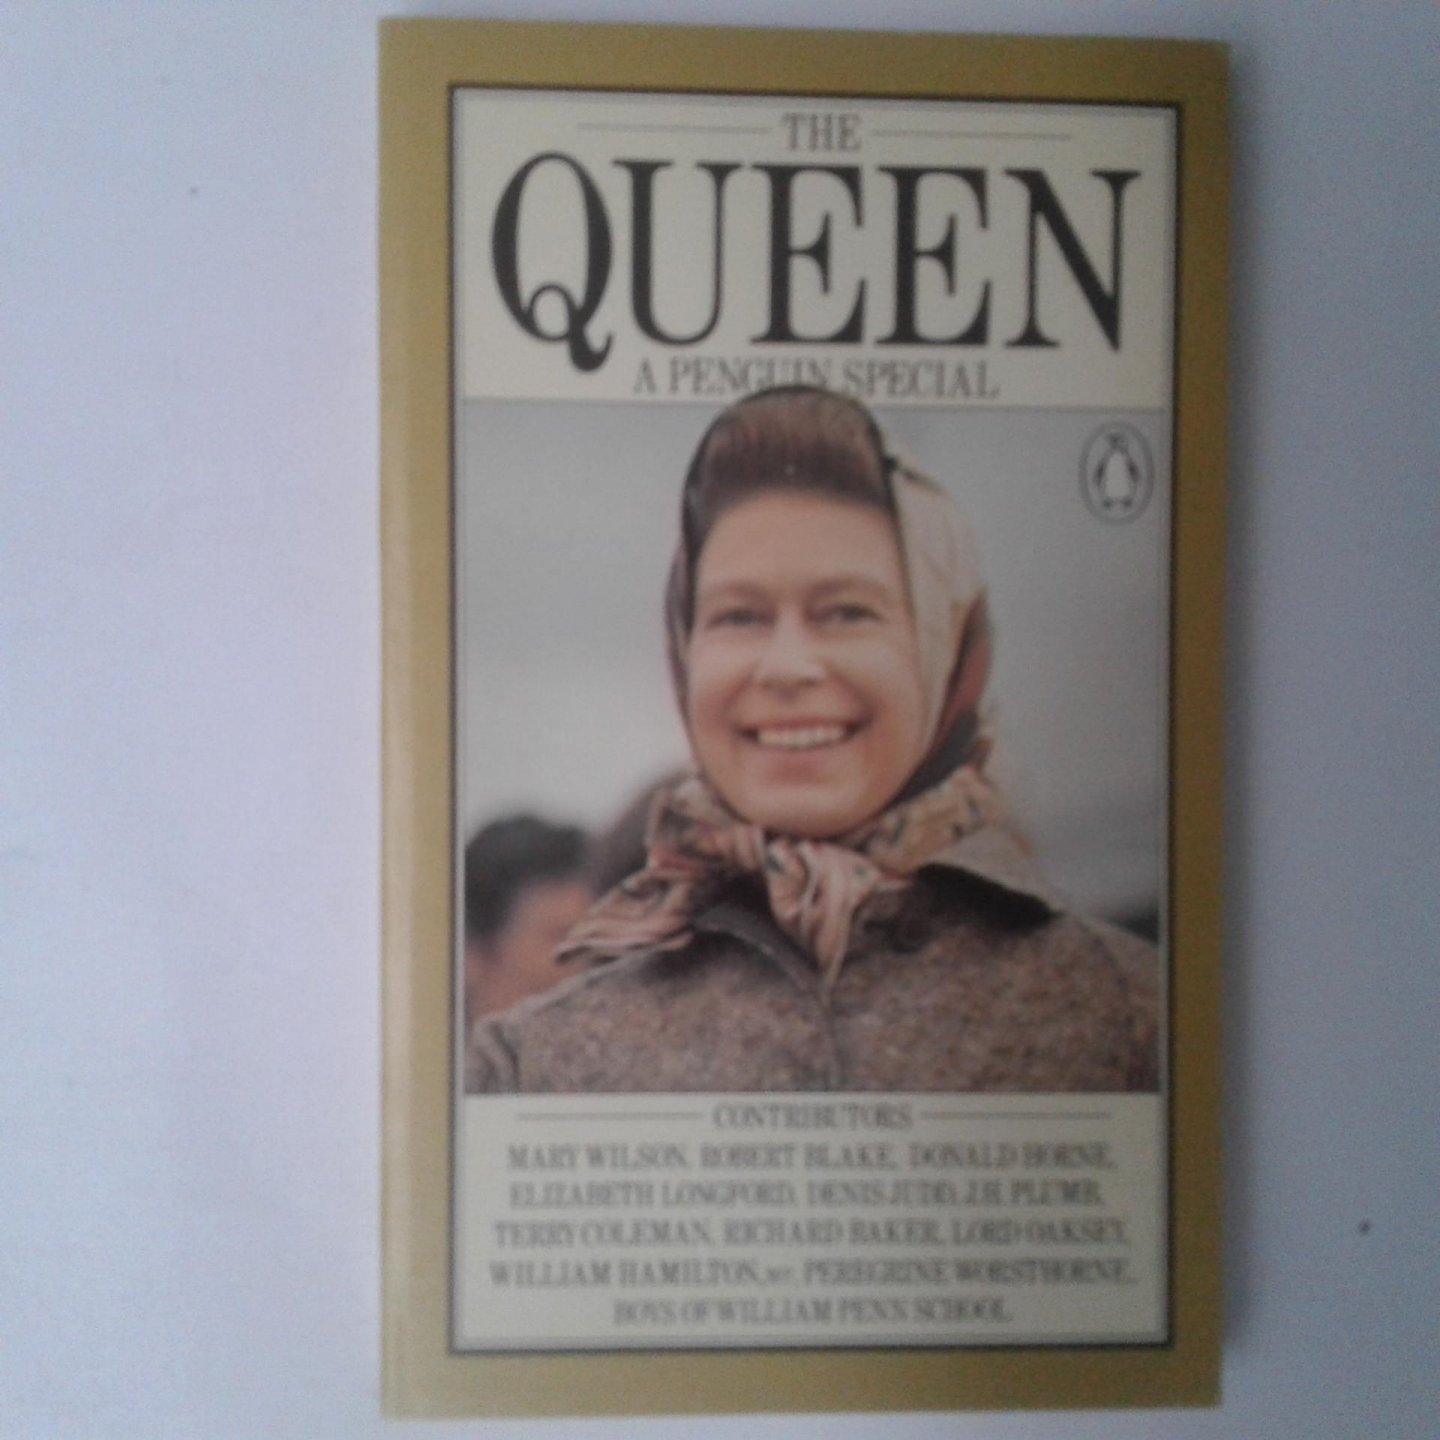  - The Queen ; A Penguin Special